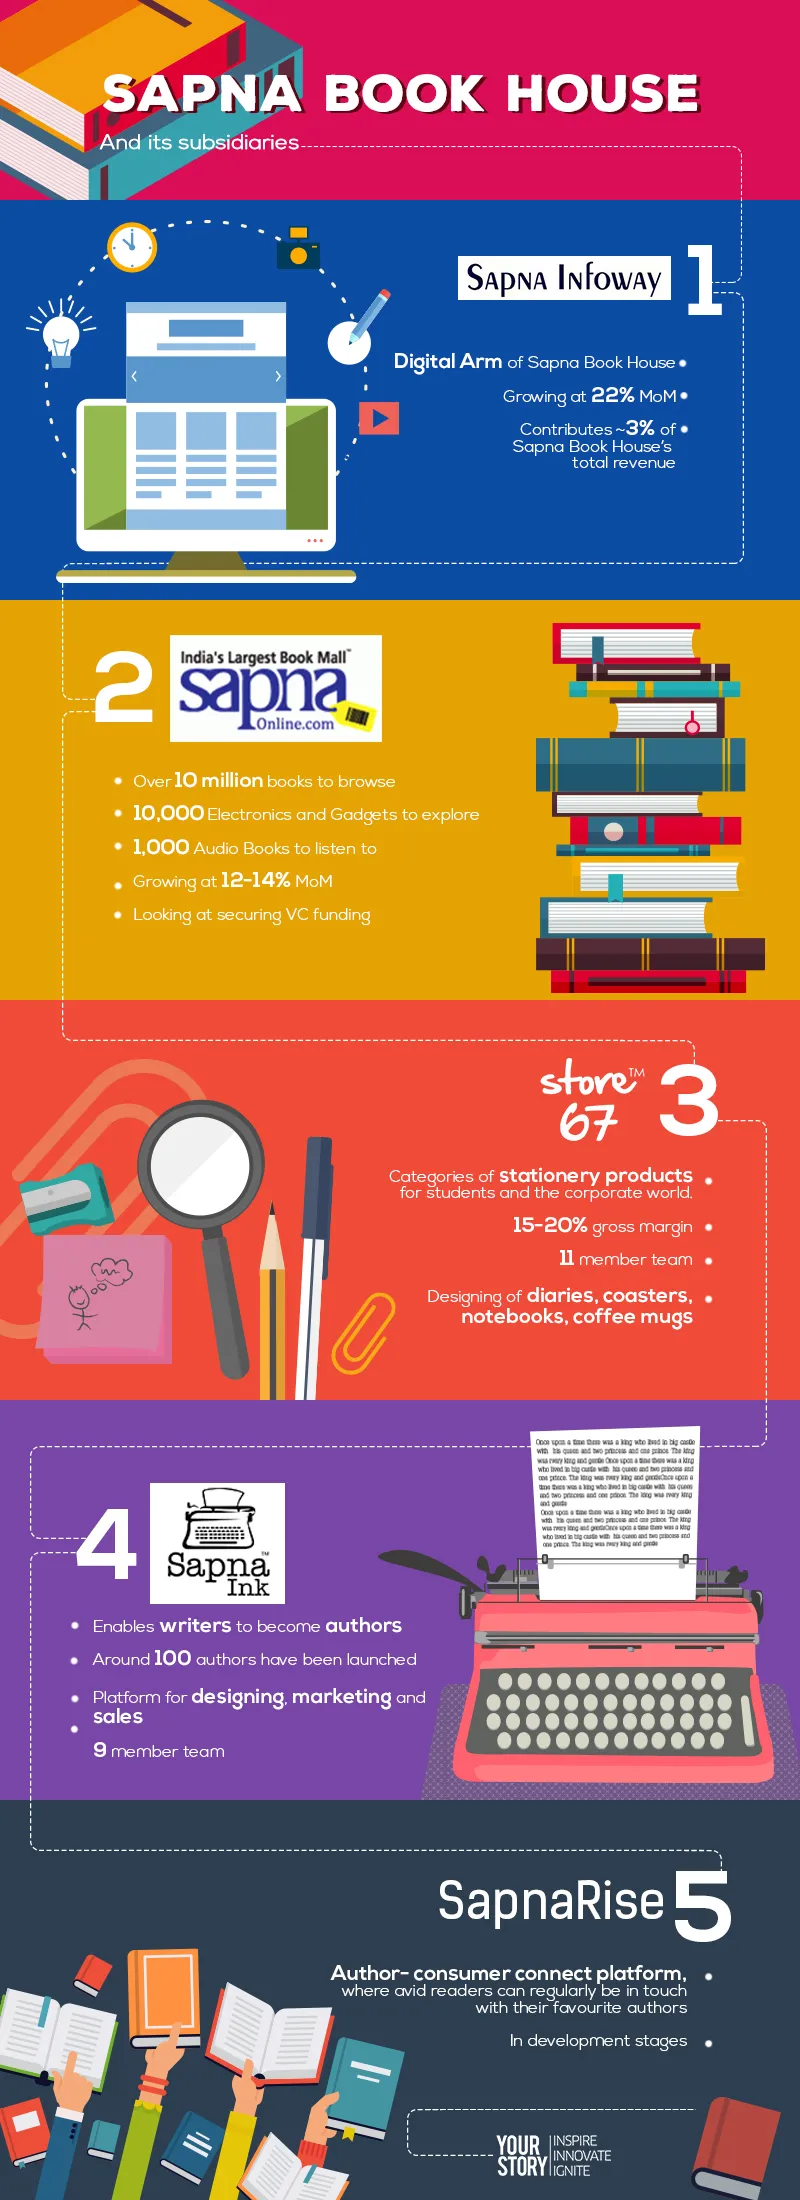 Sapna Book House Infographic